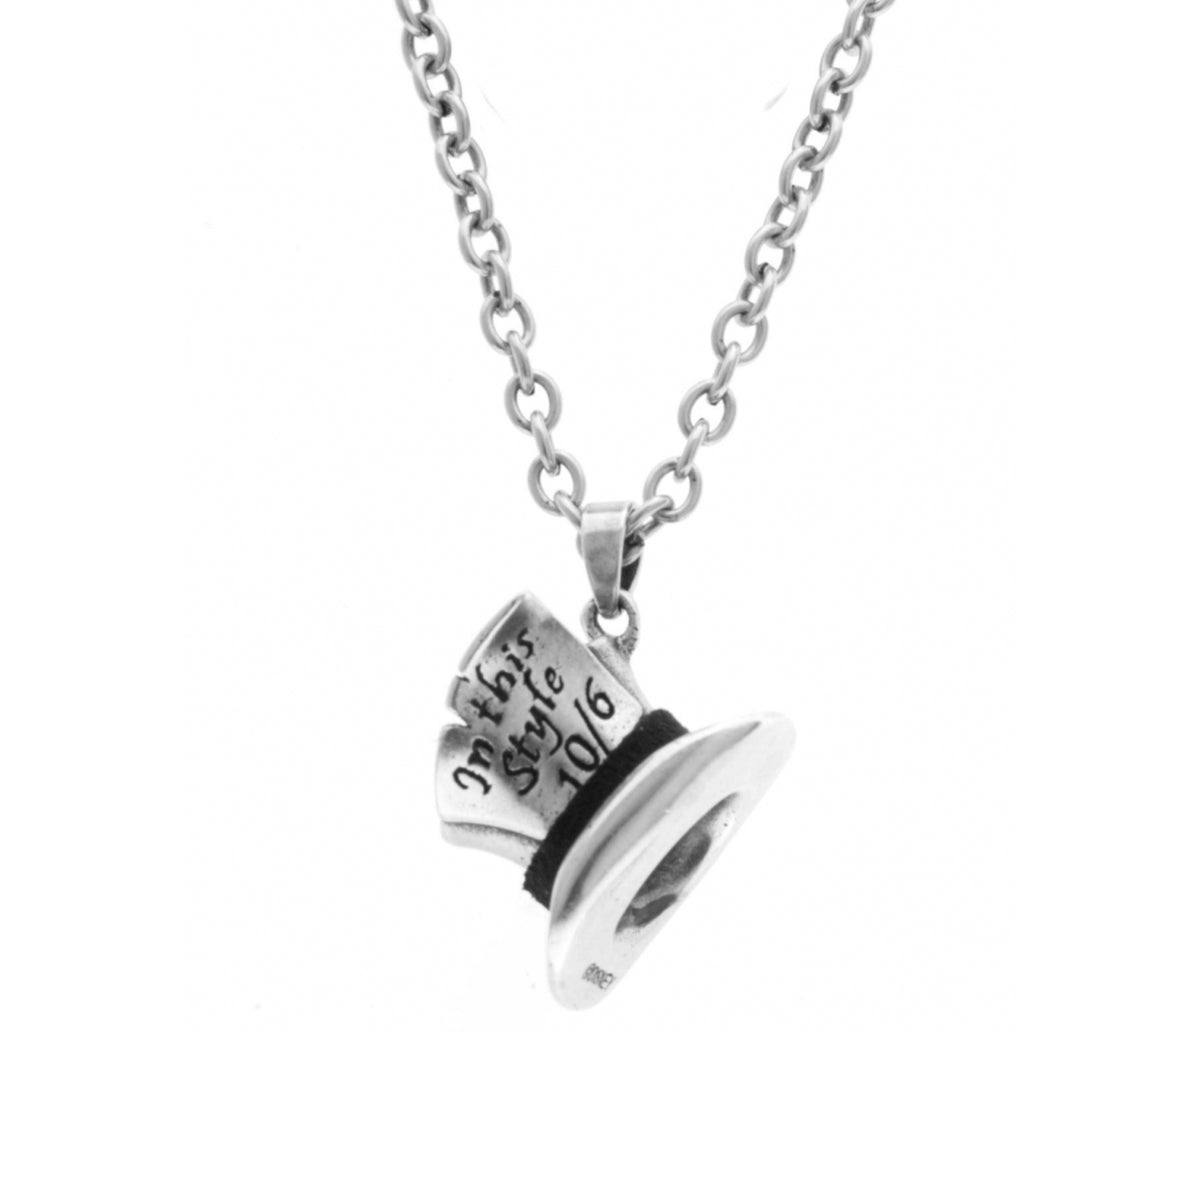 Alice in Wonderland Charm Necklace